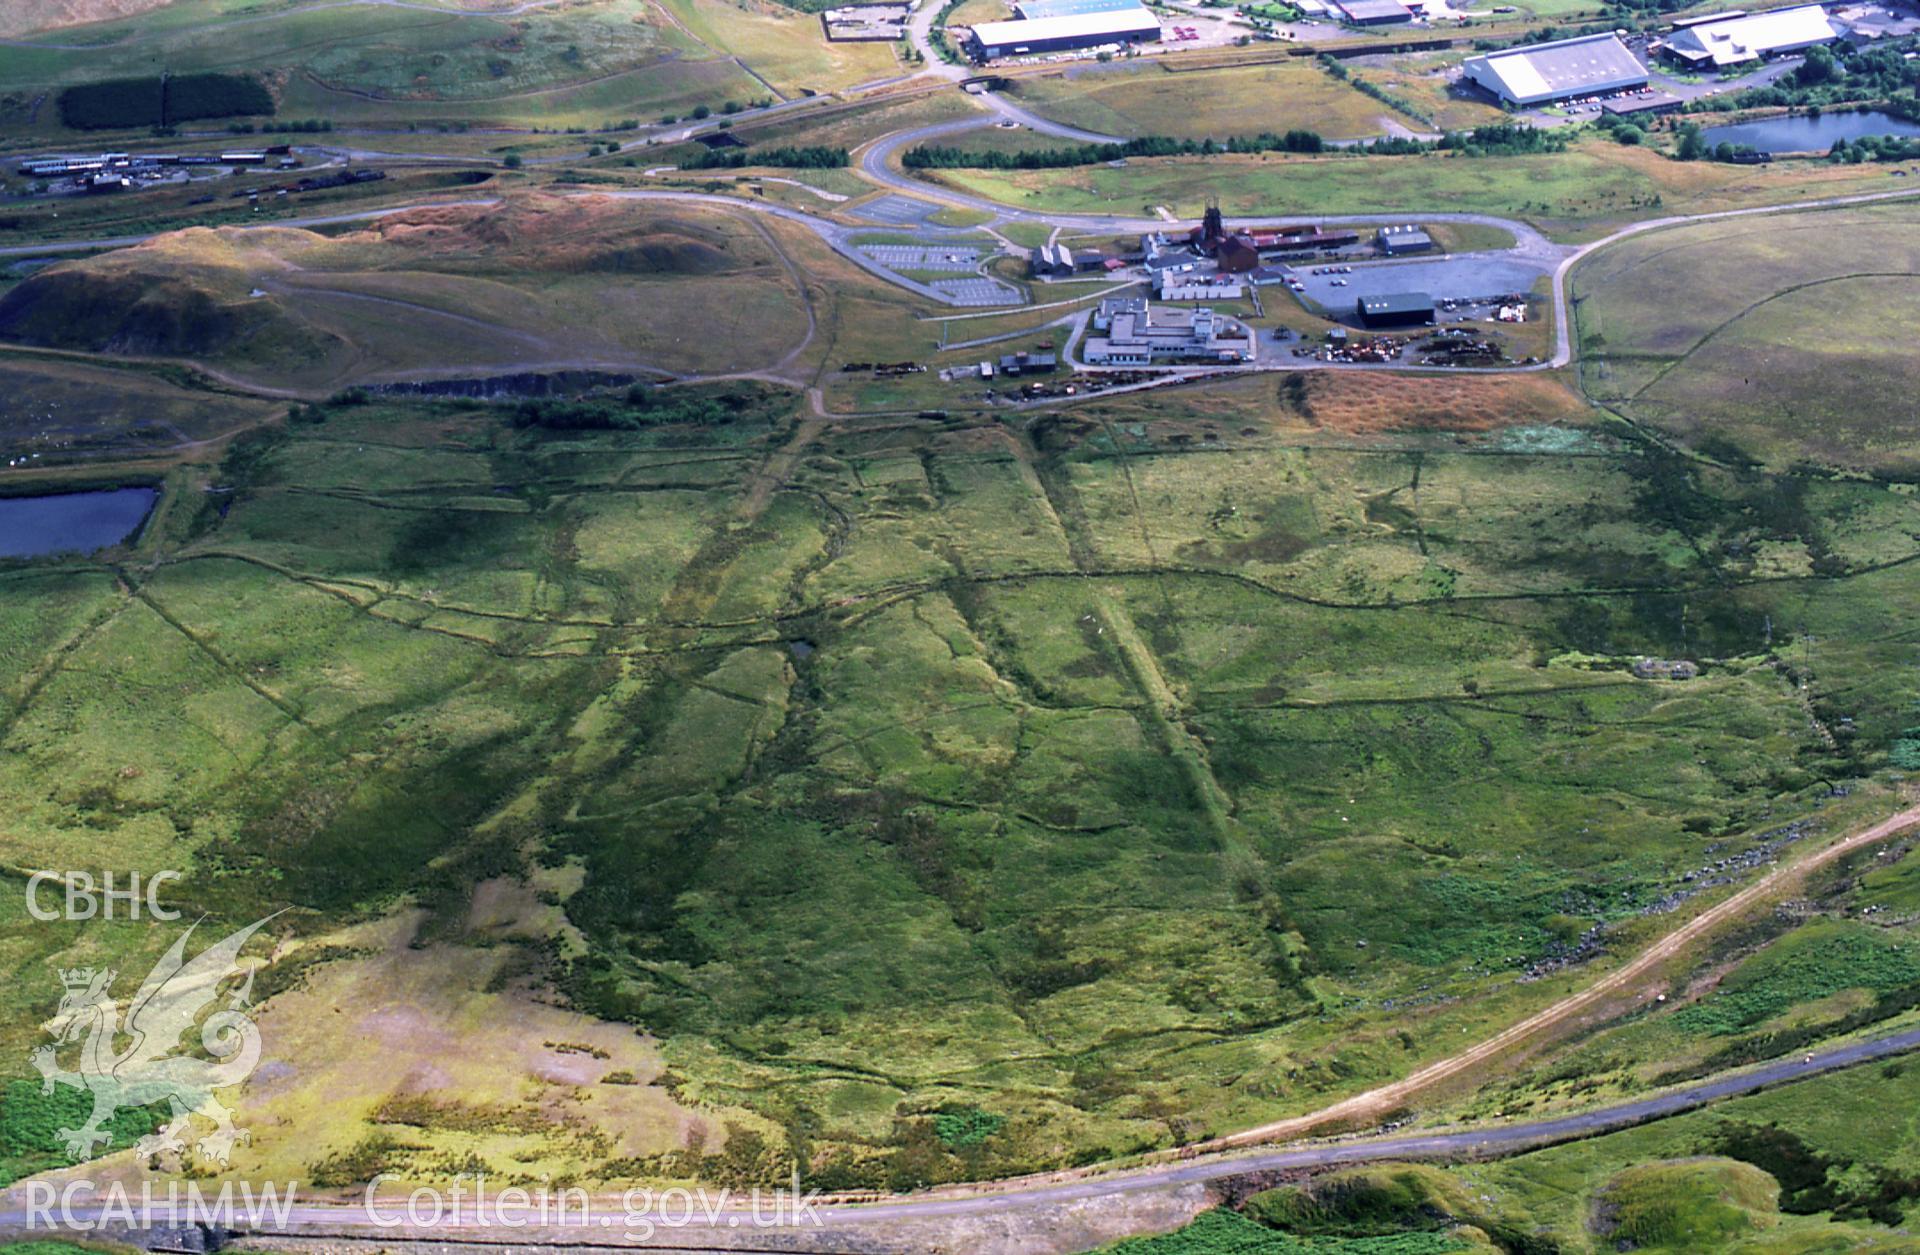 RCAHMW colour slide oblique aerial photograph of Big Pit Coal Mine, Blaenavon, taken on 24/07/1998 by Toby Driver